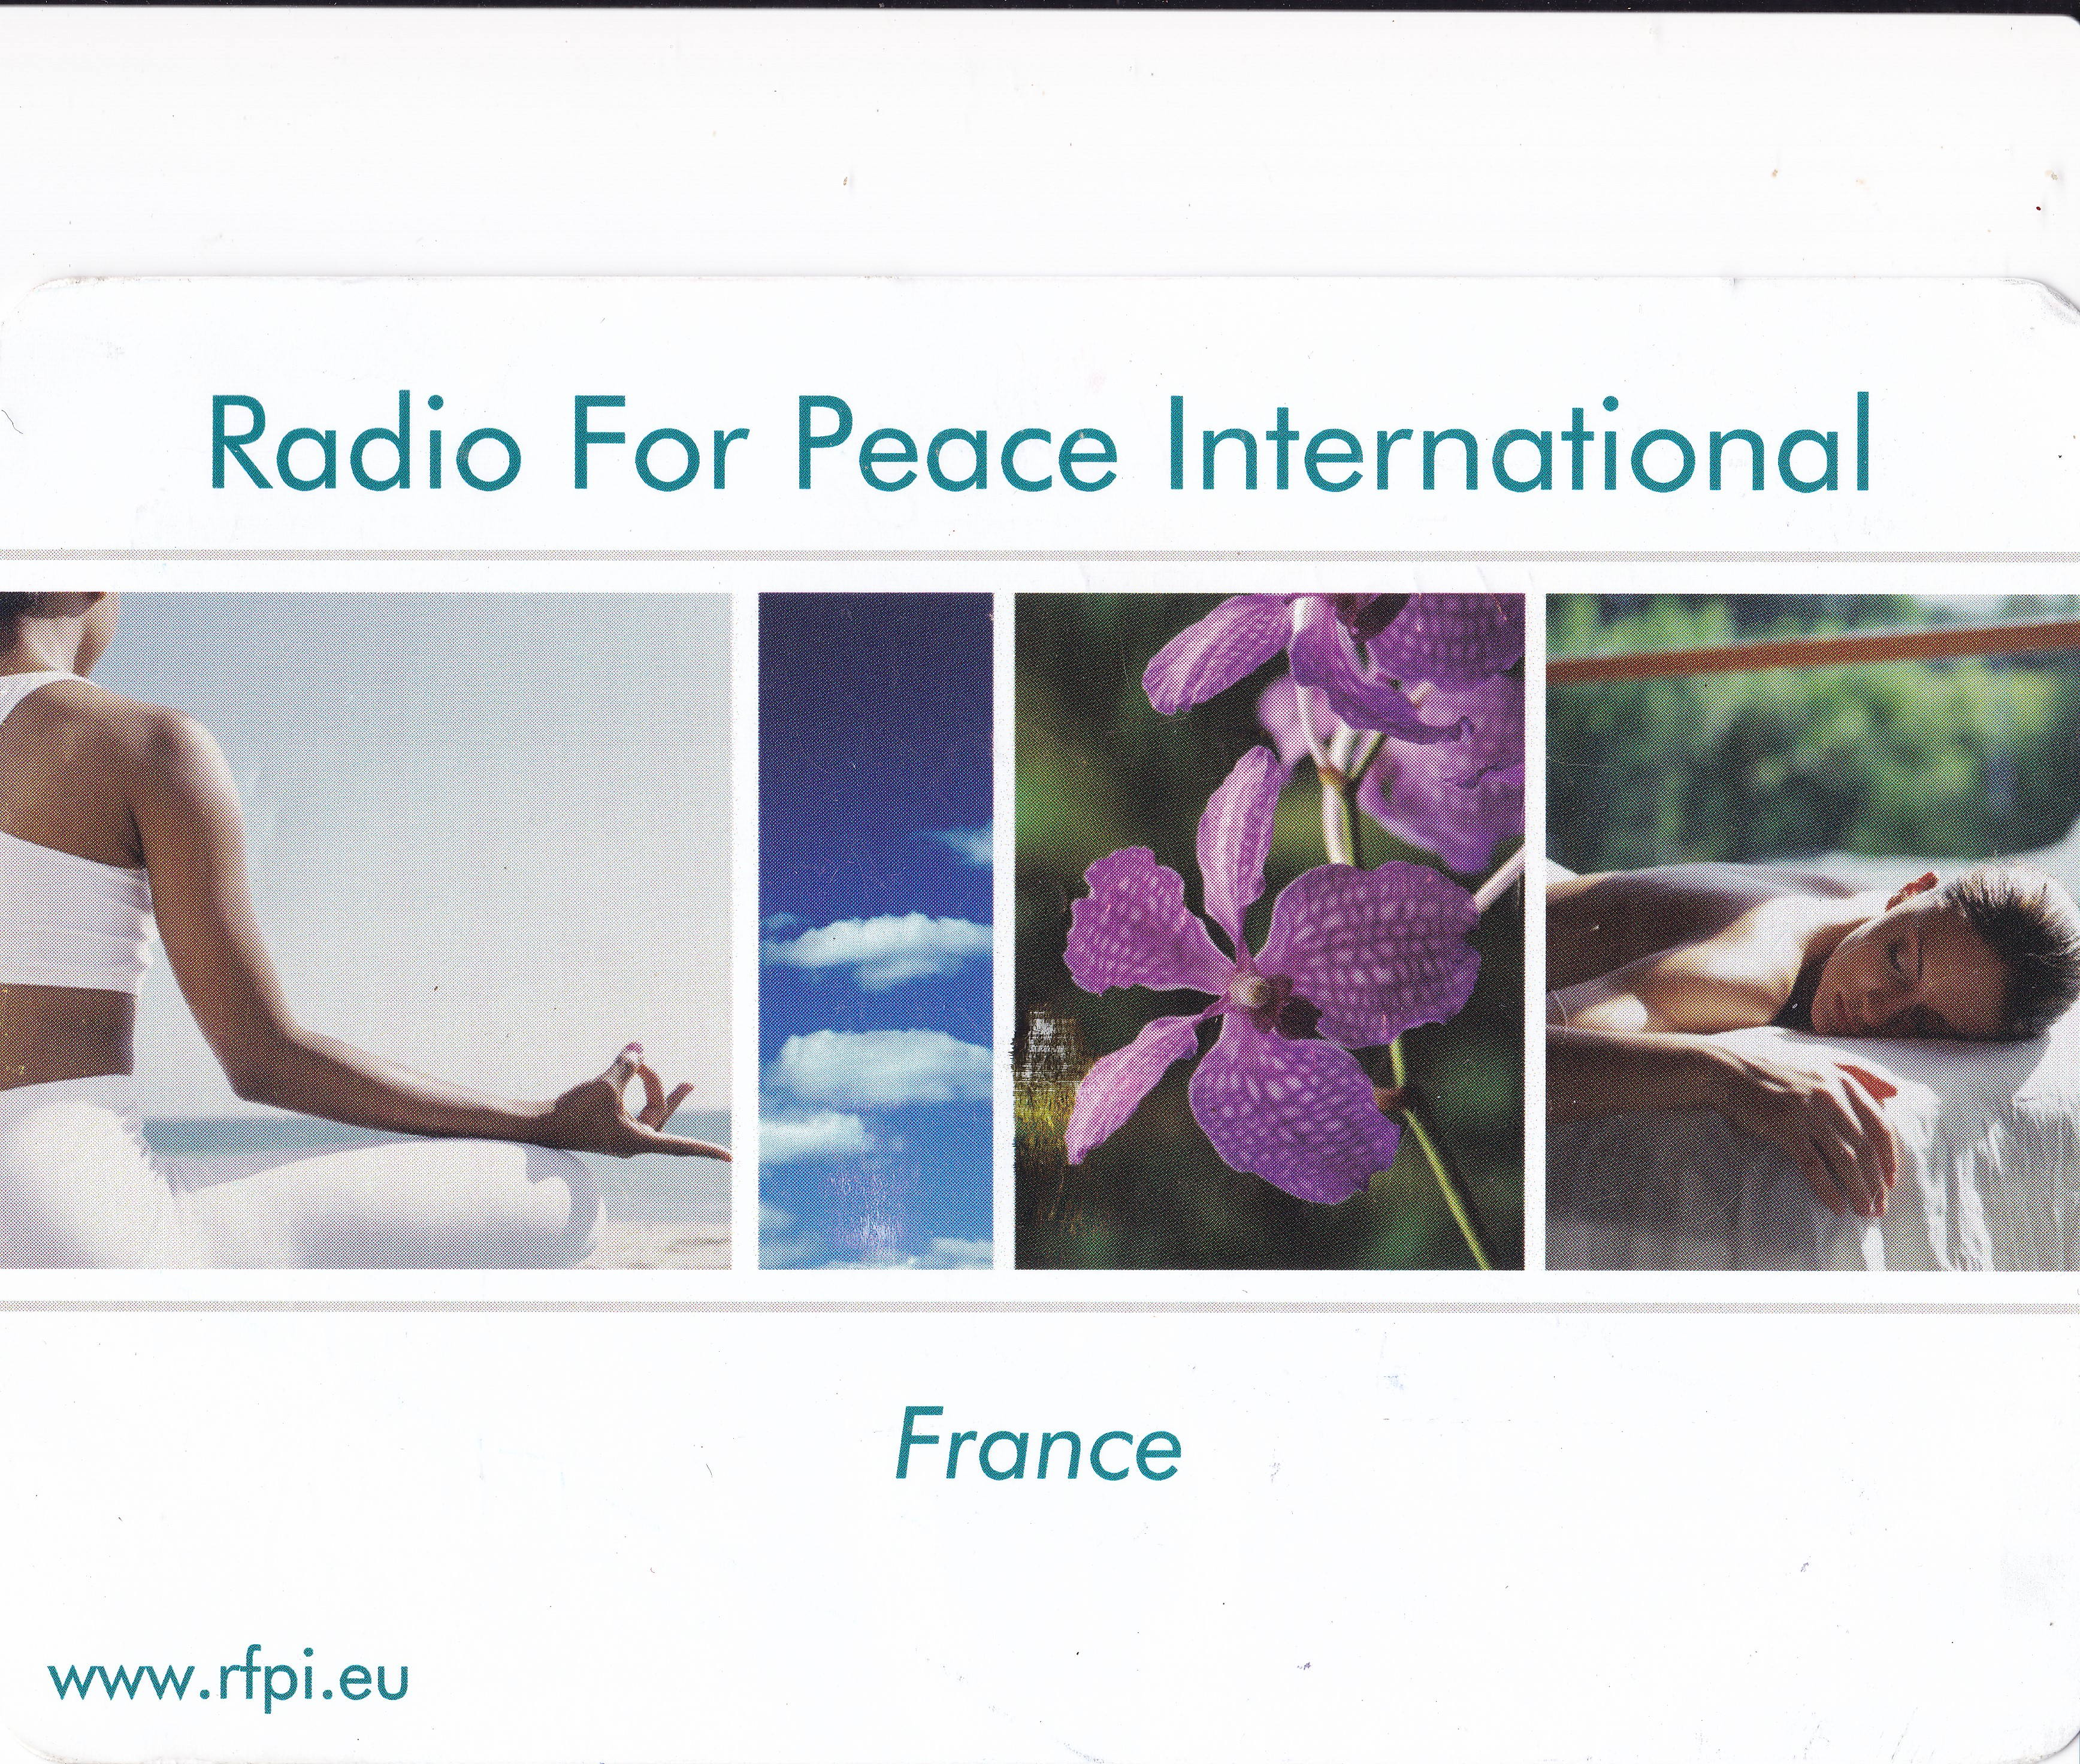 RADIO FOR PEACE INTERNATIONAL